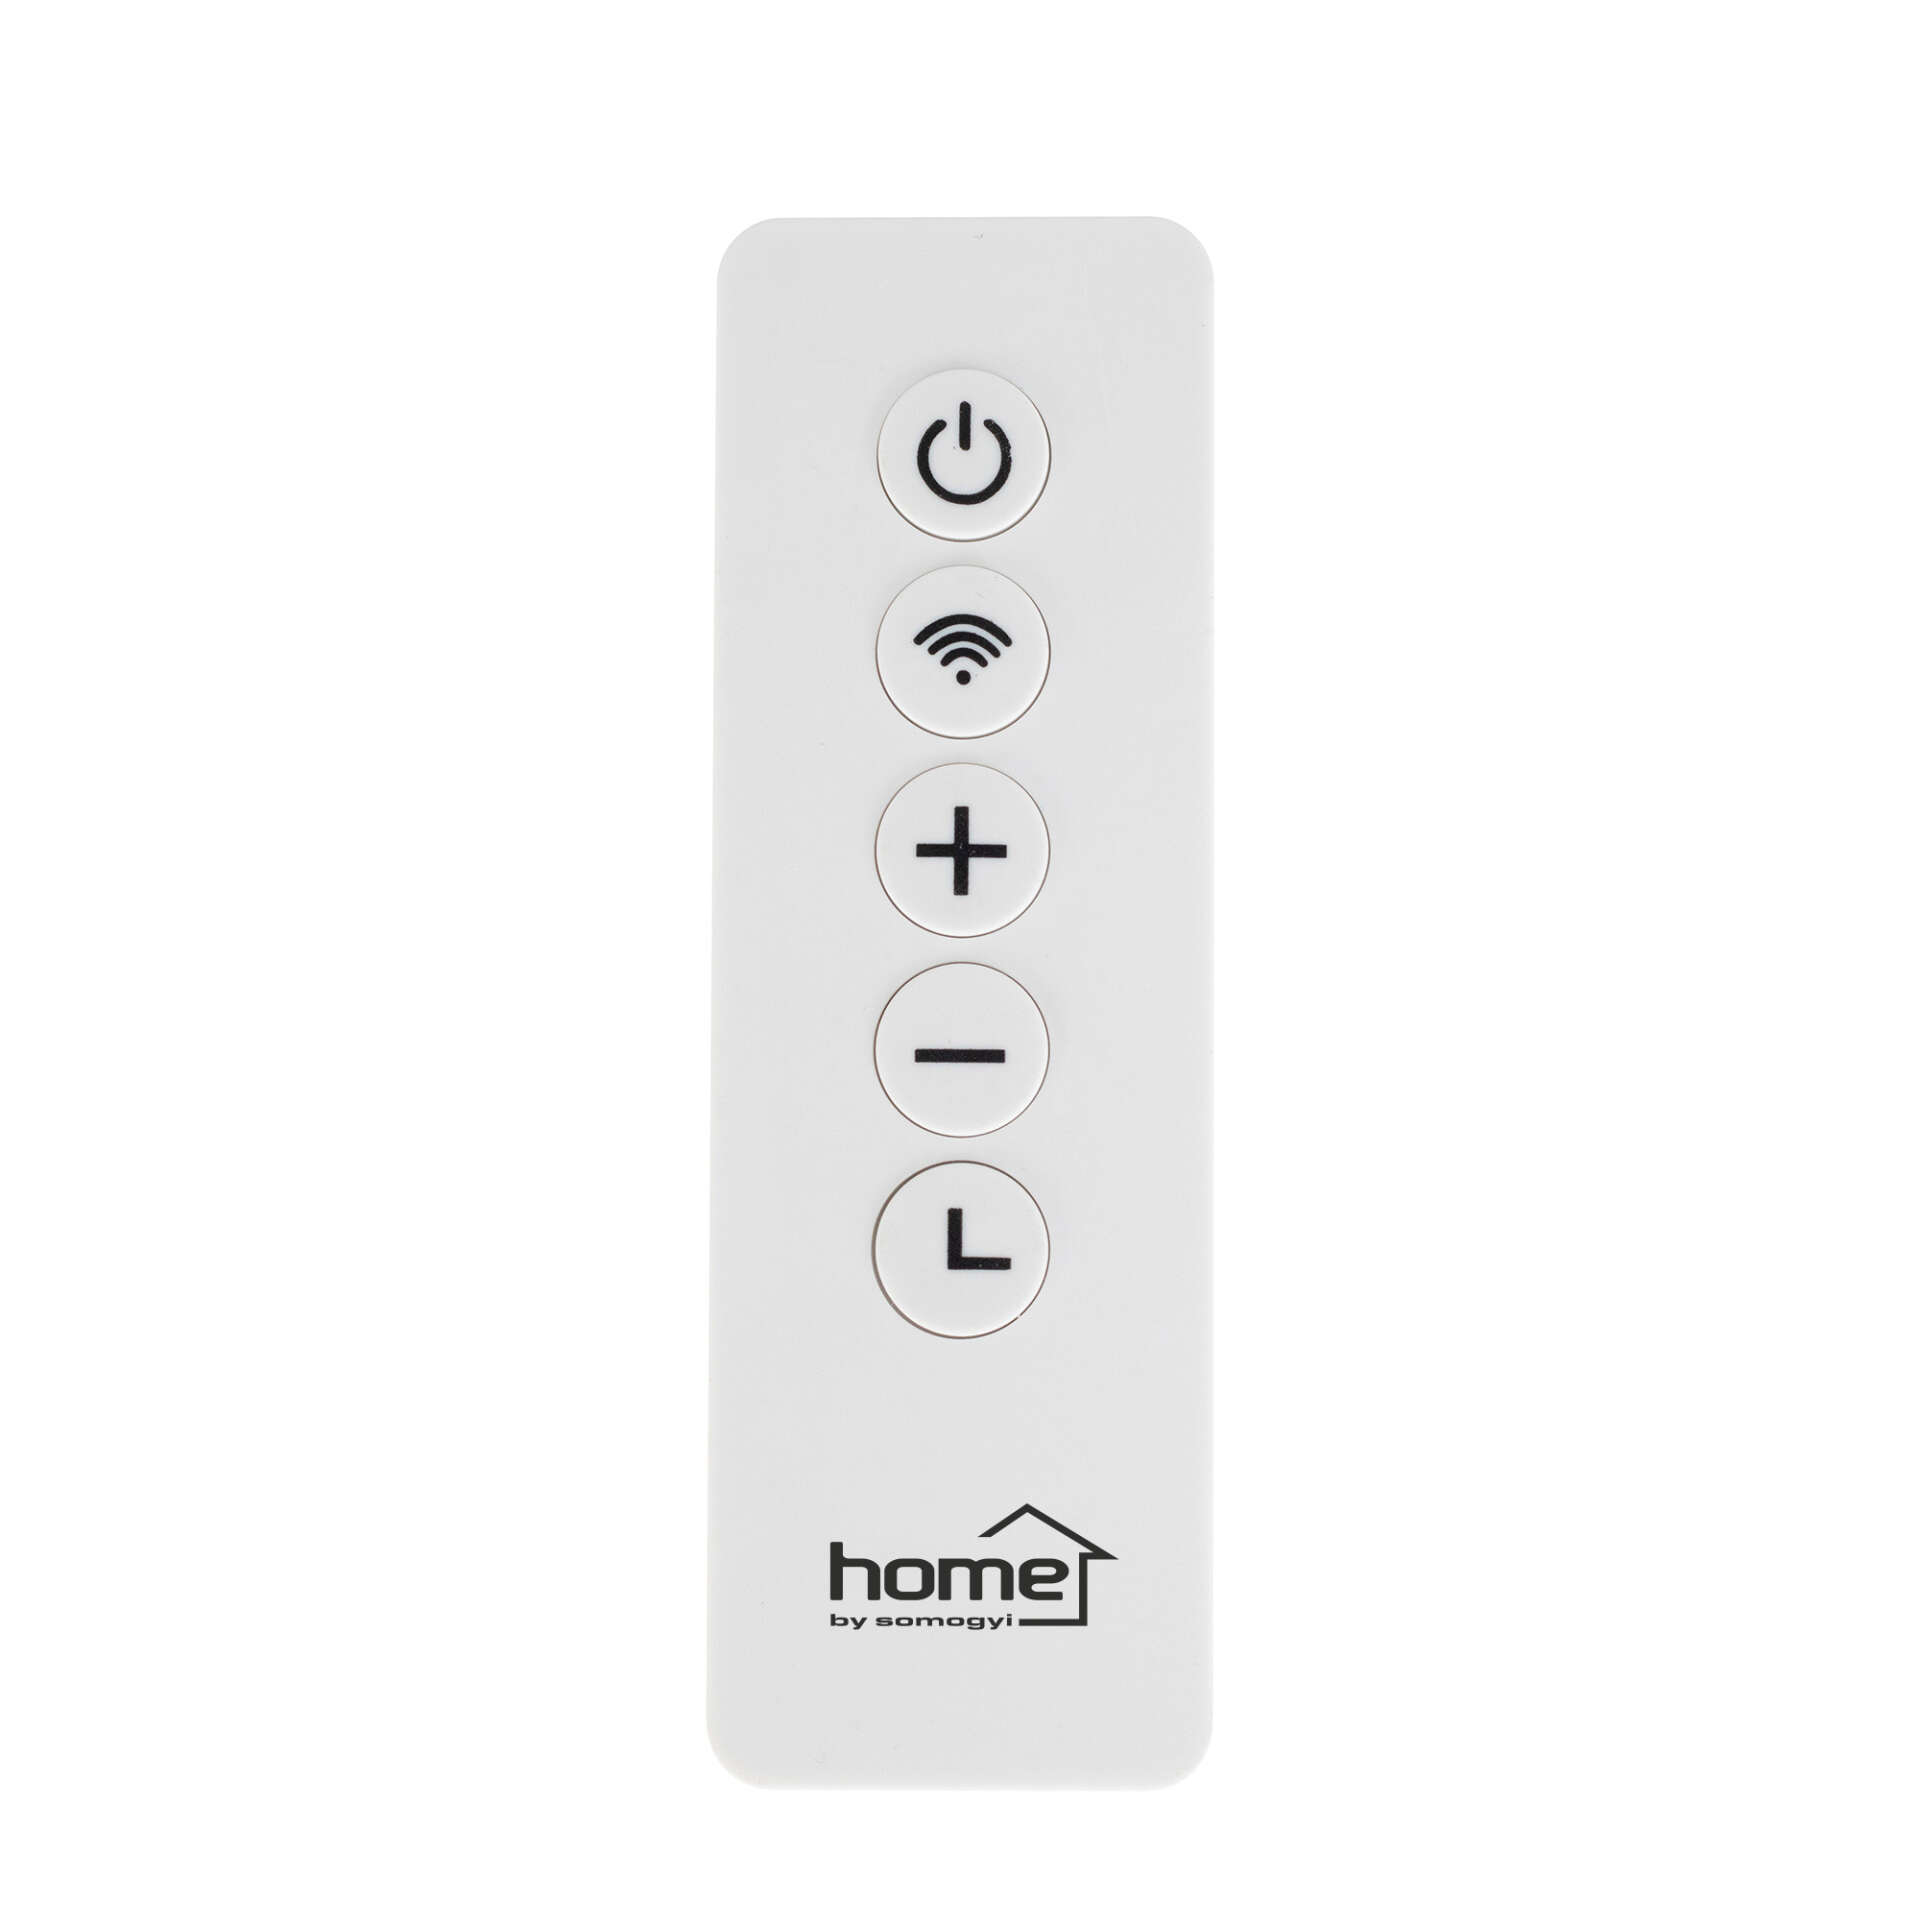 Home by somogyi home wifi smart infra panel , hibrid fűtőtest - f...